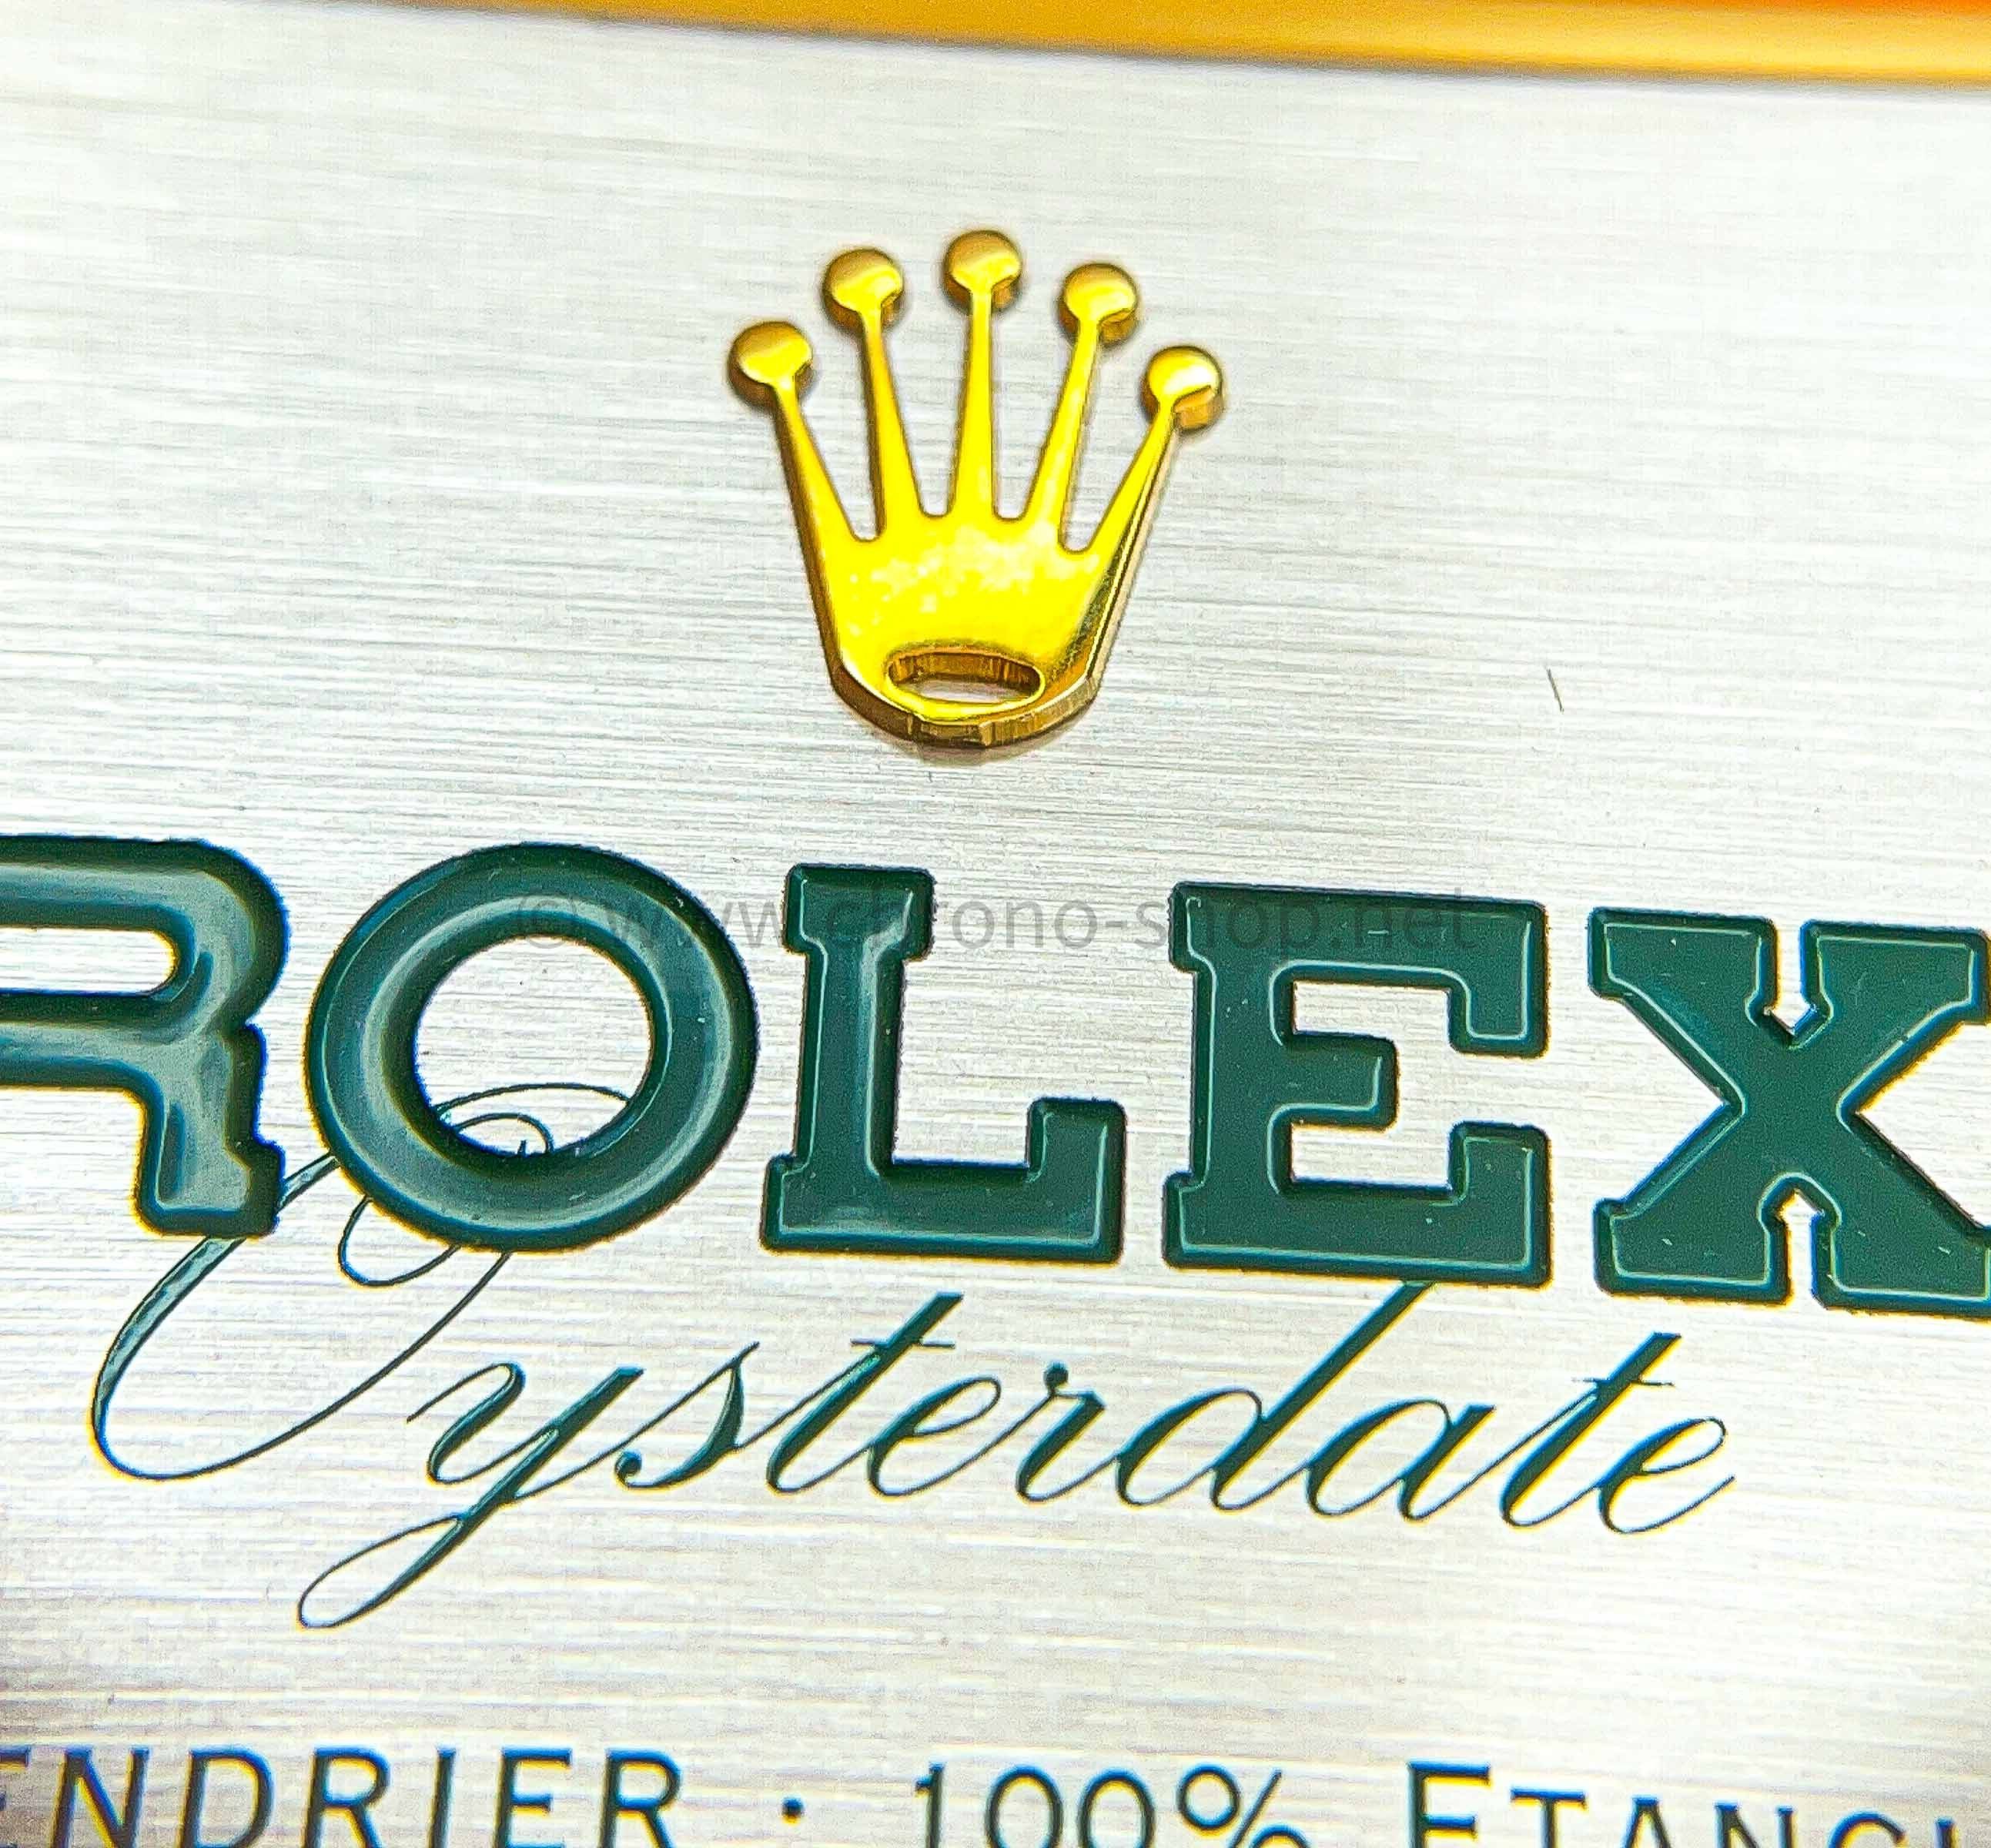 Rolex Genuine Rare Collectible Vintage Rolex OYSTERDATE 6694 Jeweler Dealer Metal Display Plaque showroom